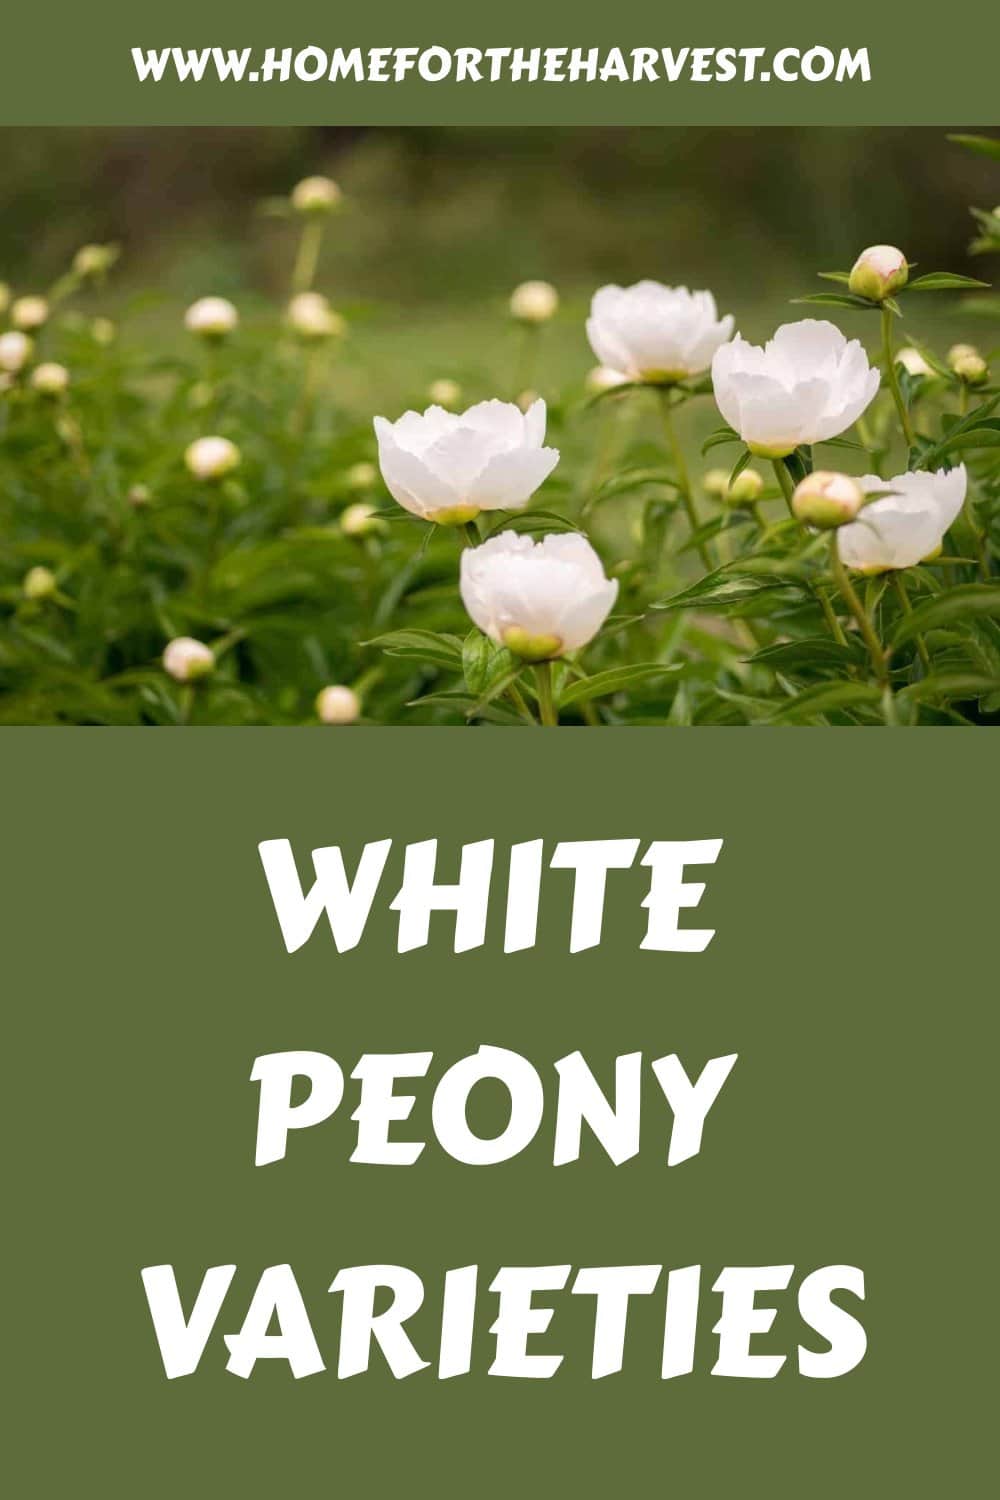 White peony varieties generated pin 23242